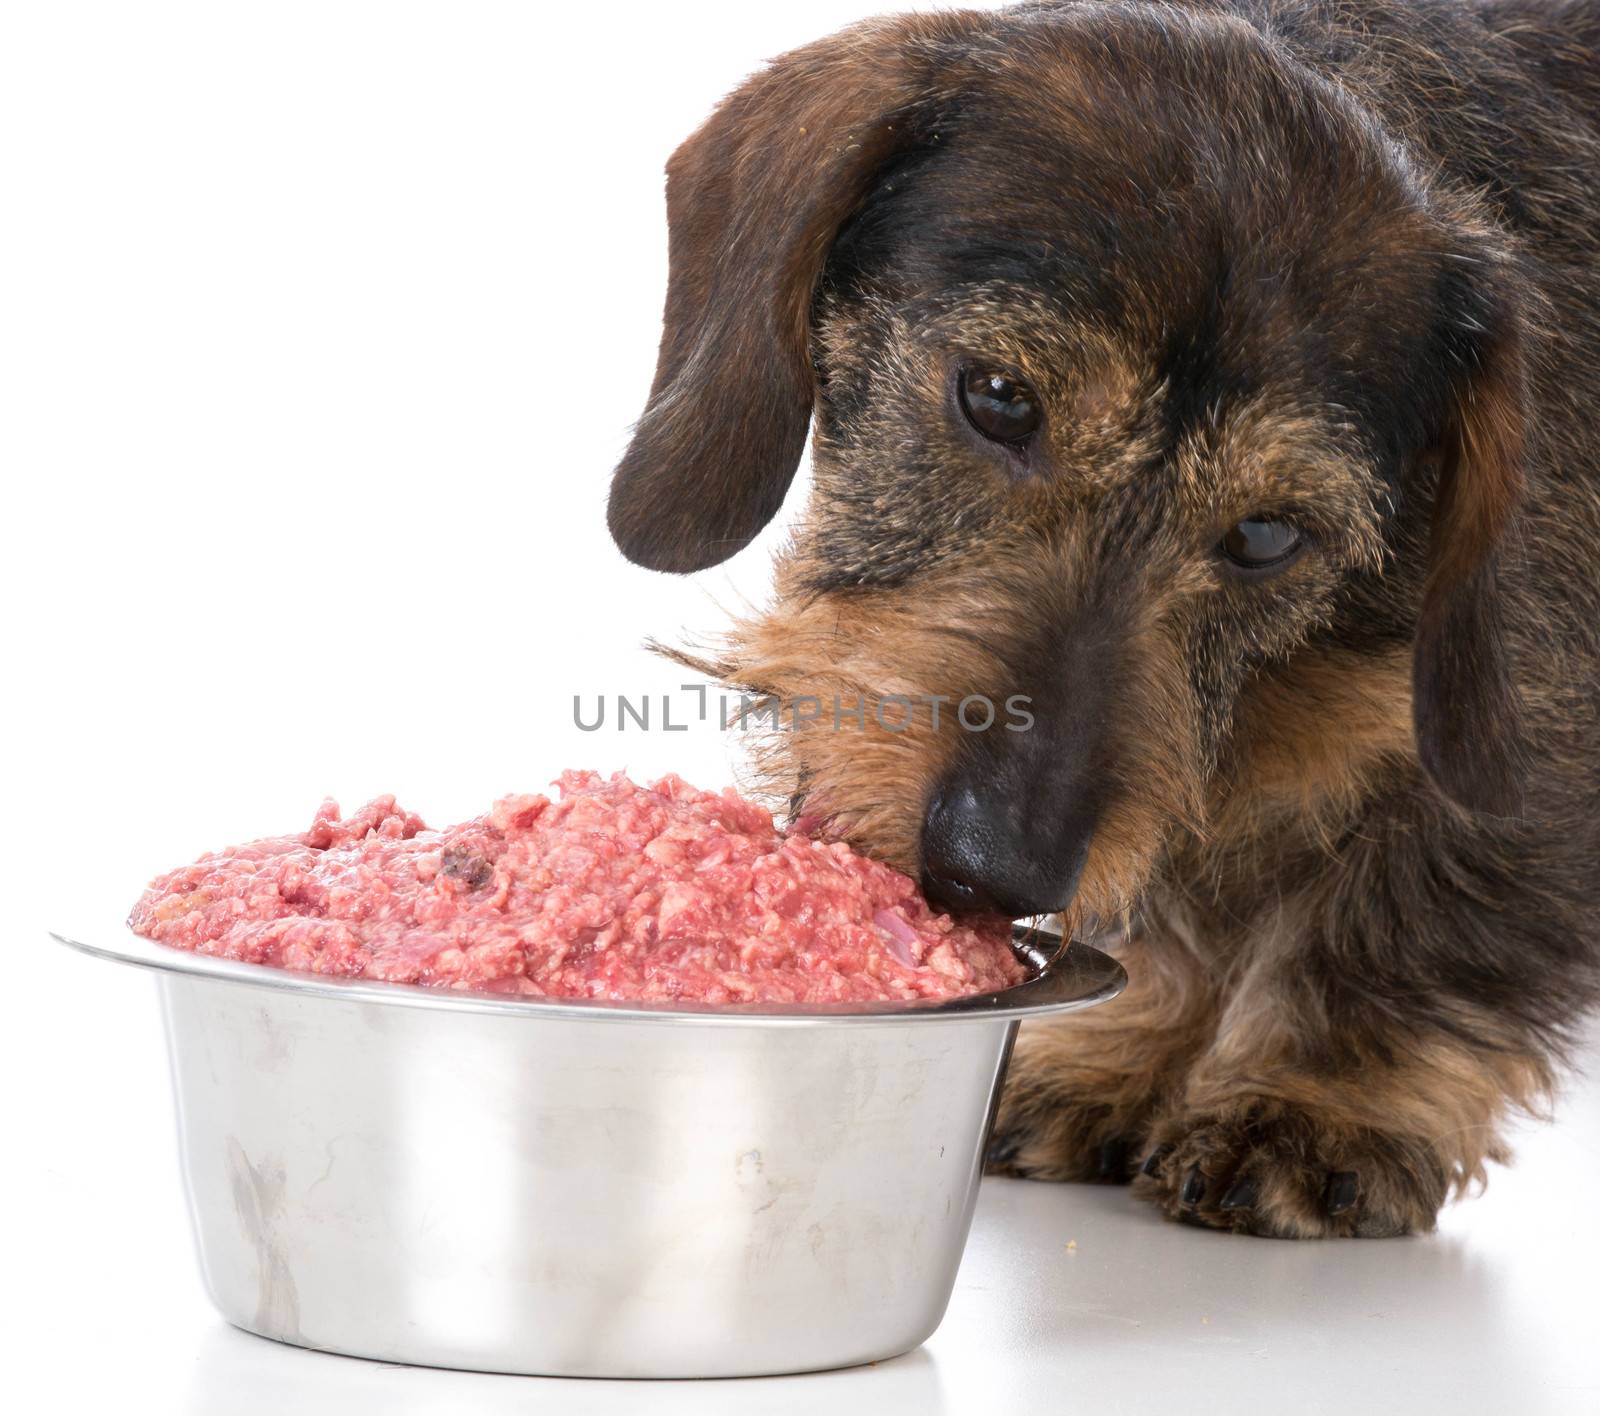 feeding the dog raw food by willeecole123